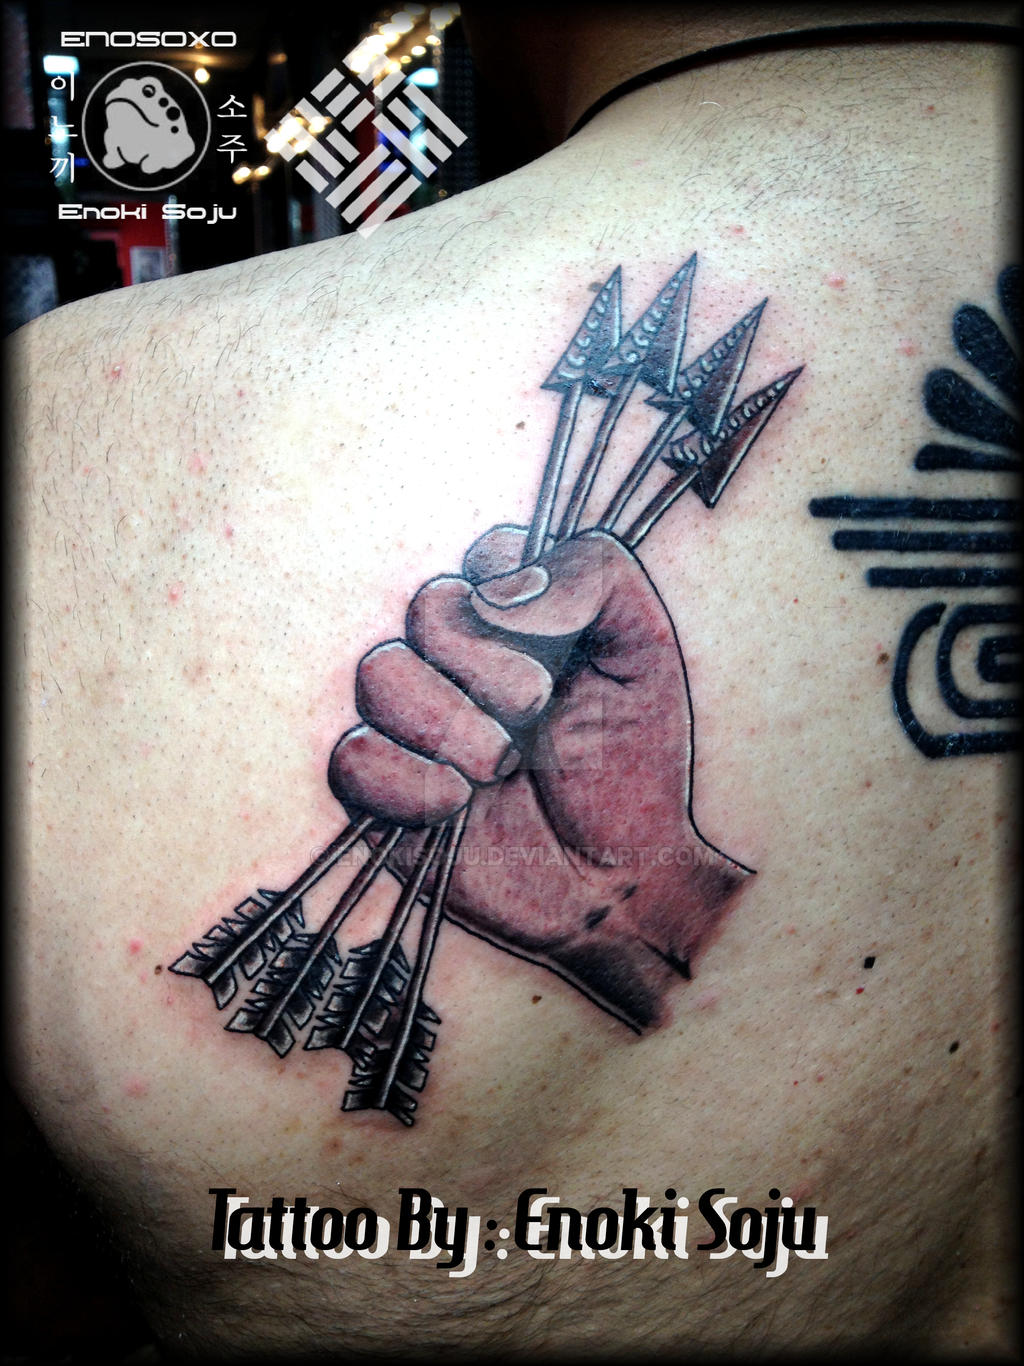 Hand and Arrows Tattoo By Enoki Soju by enokisoju on DeviantArt